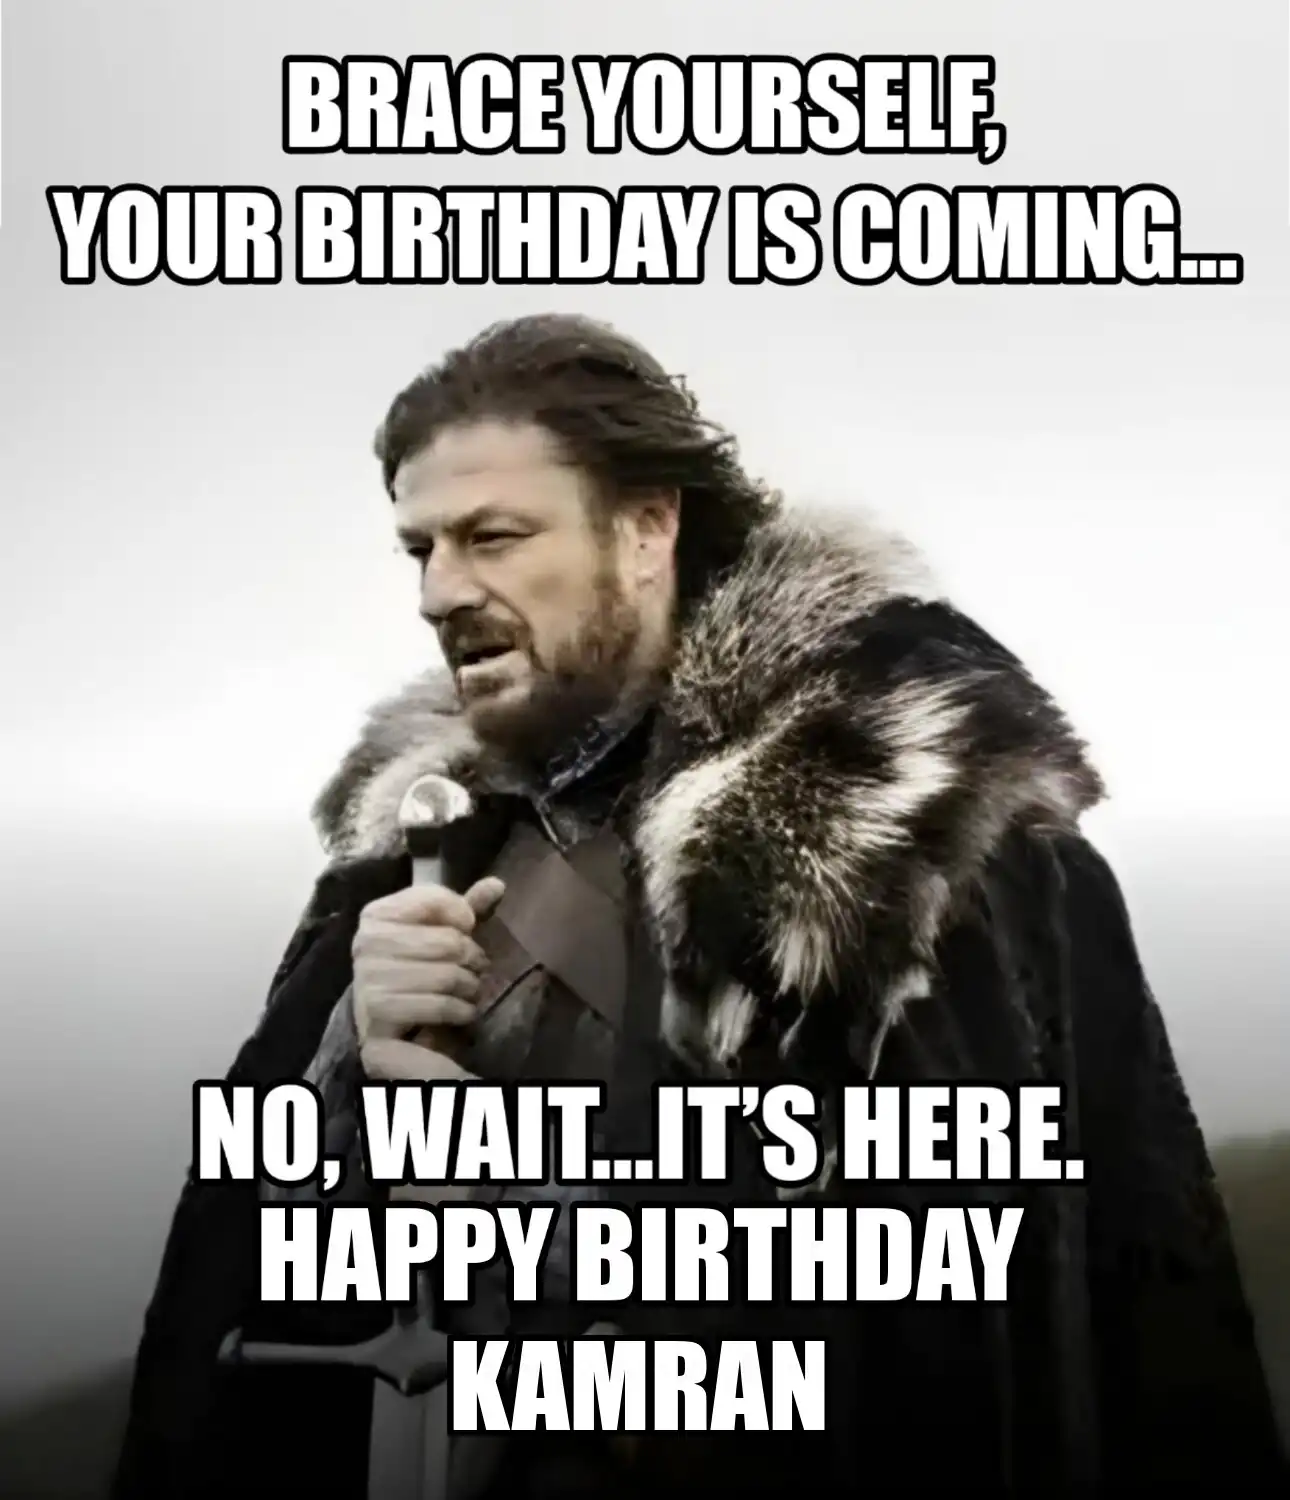 Happy Birthday Kamran Brace Yourself Your Birthday Is Coming Meme